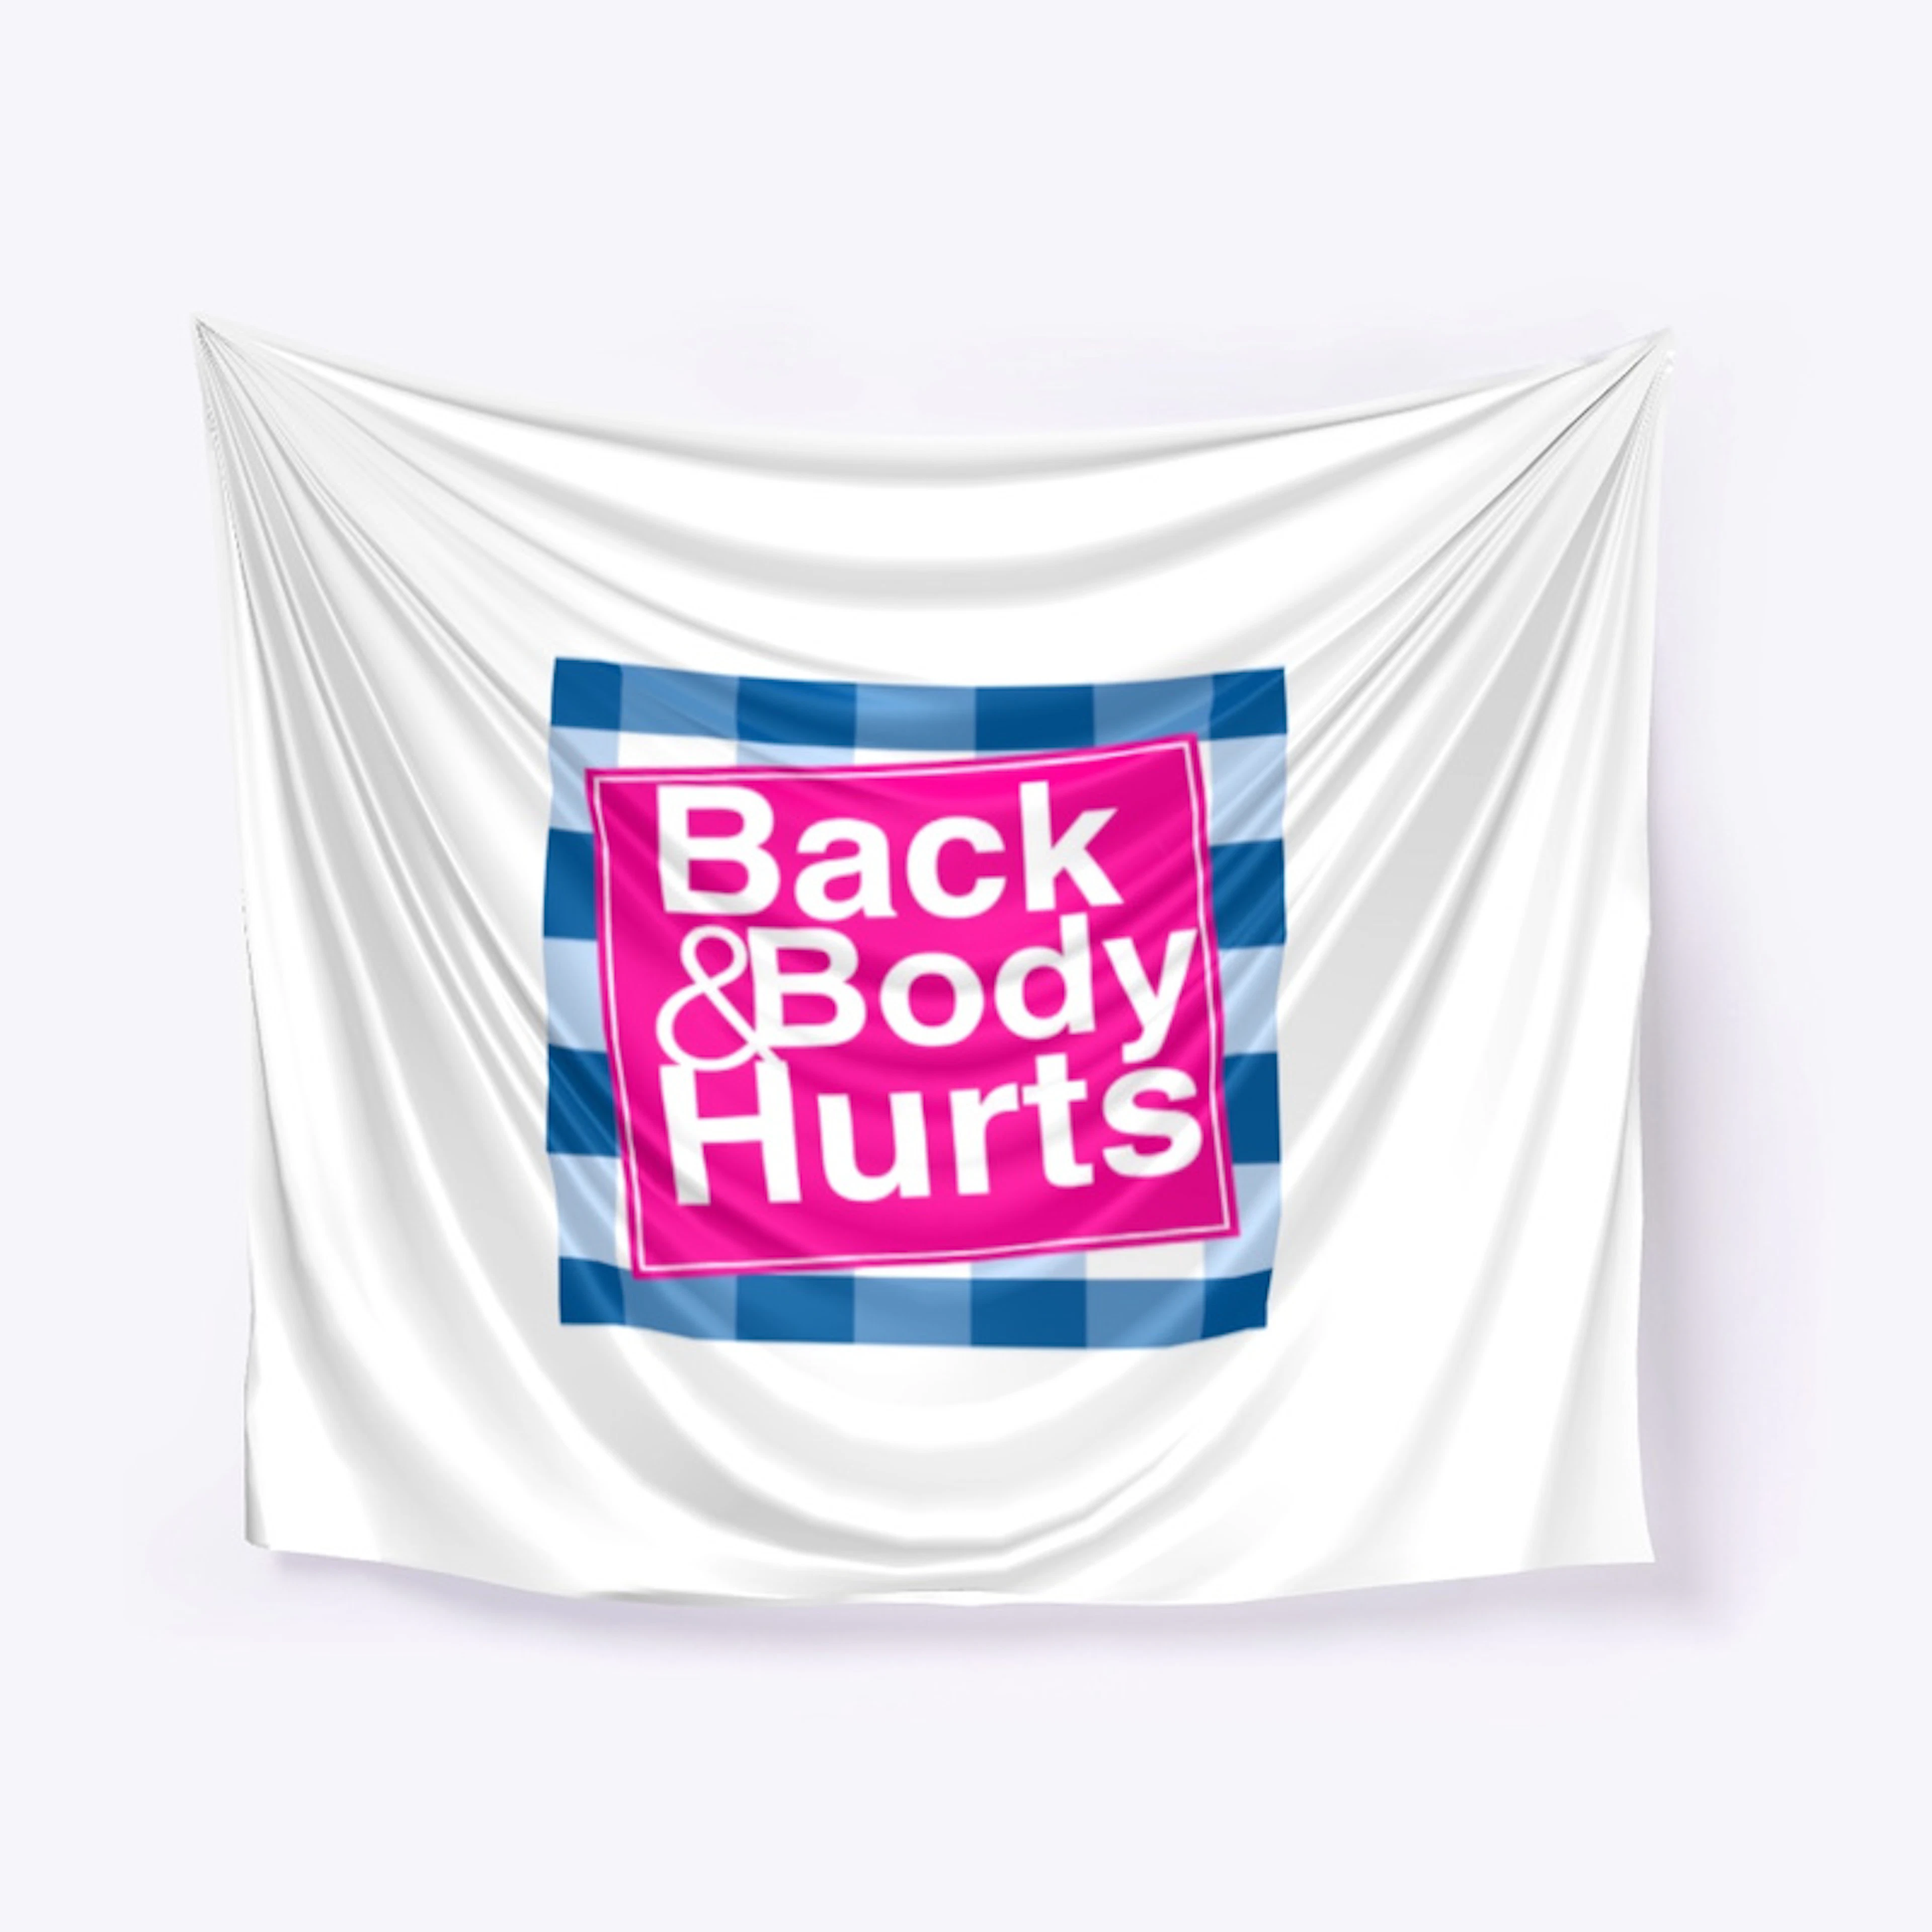 Back & Body Hurts 